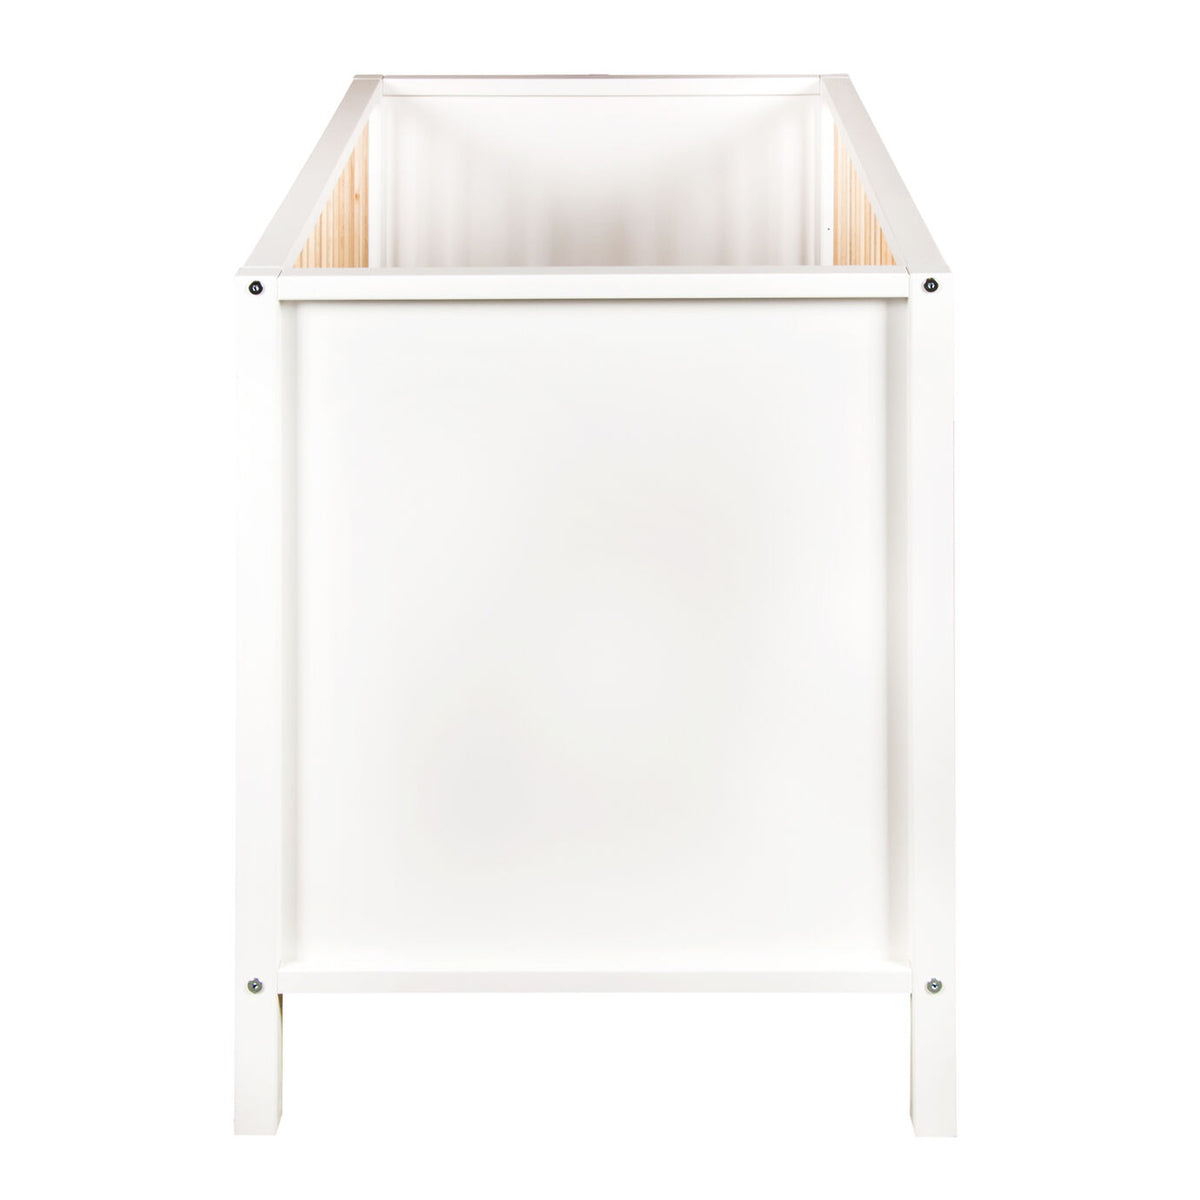 Quax Nordic Kinderbett 60 x 120 cm white/naturel